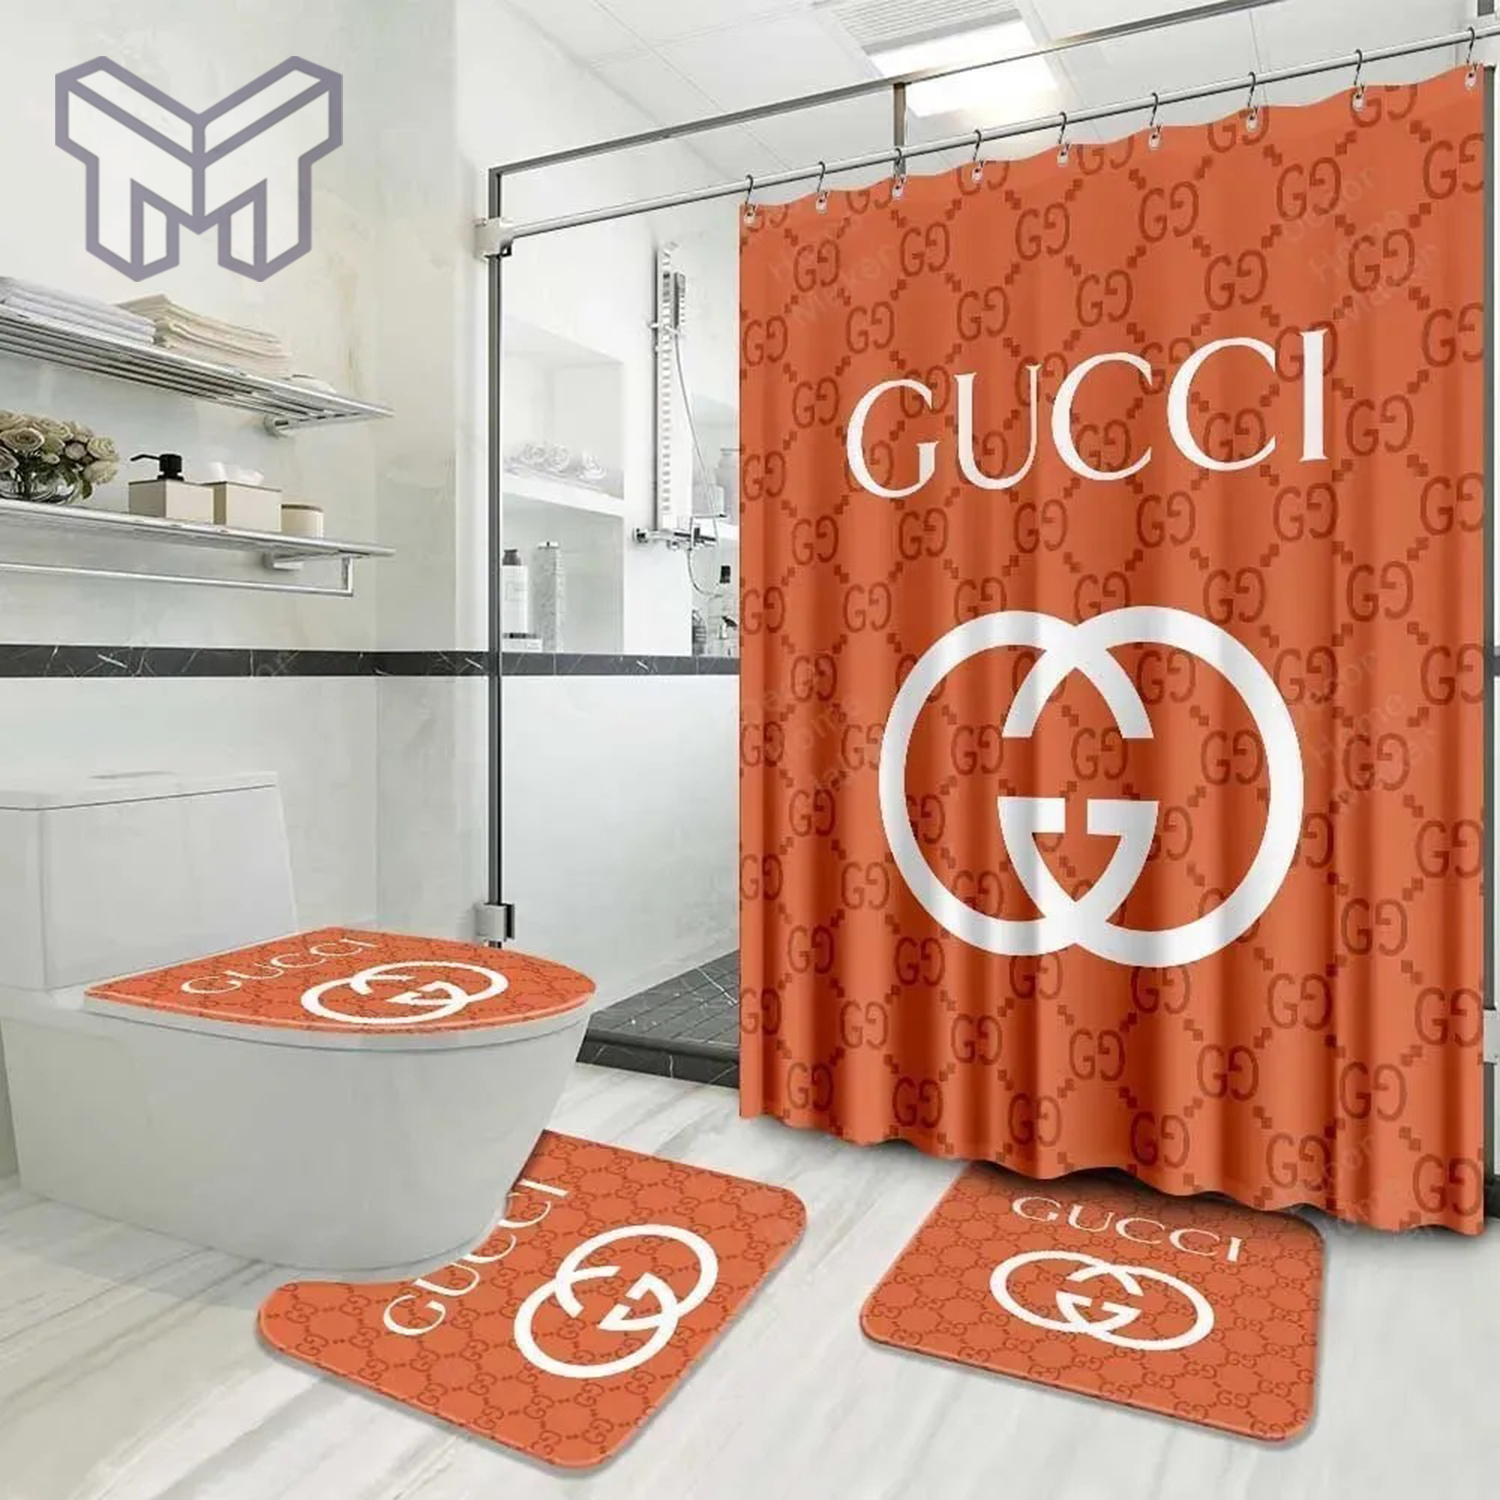 Gucci New Luxury Brand Logo Premium Bathroom Set Home Decor Shower Curtain  And Rug Toilet Seat Lid Covers Bathroom Set - Muranotex Store